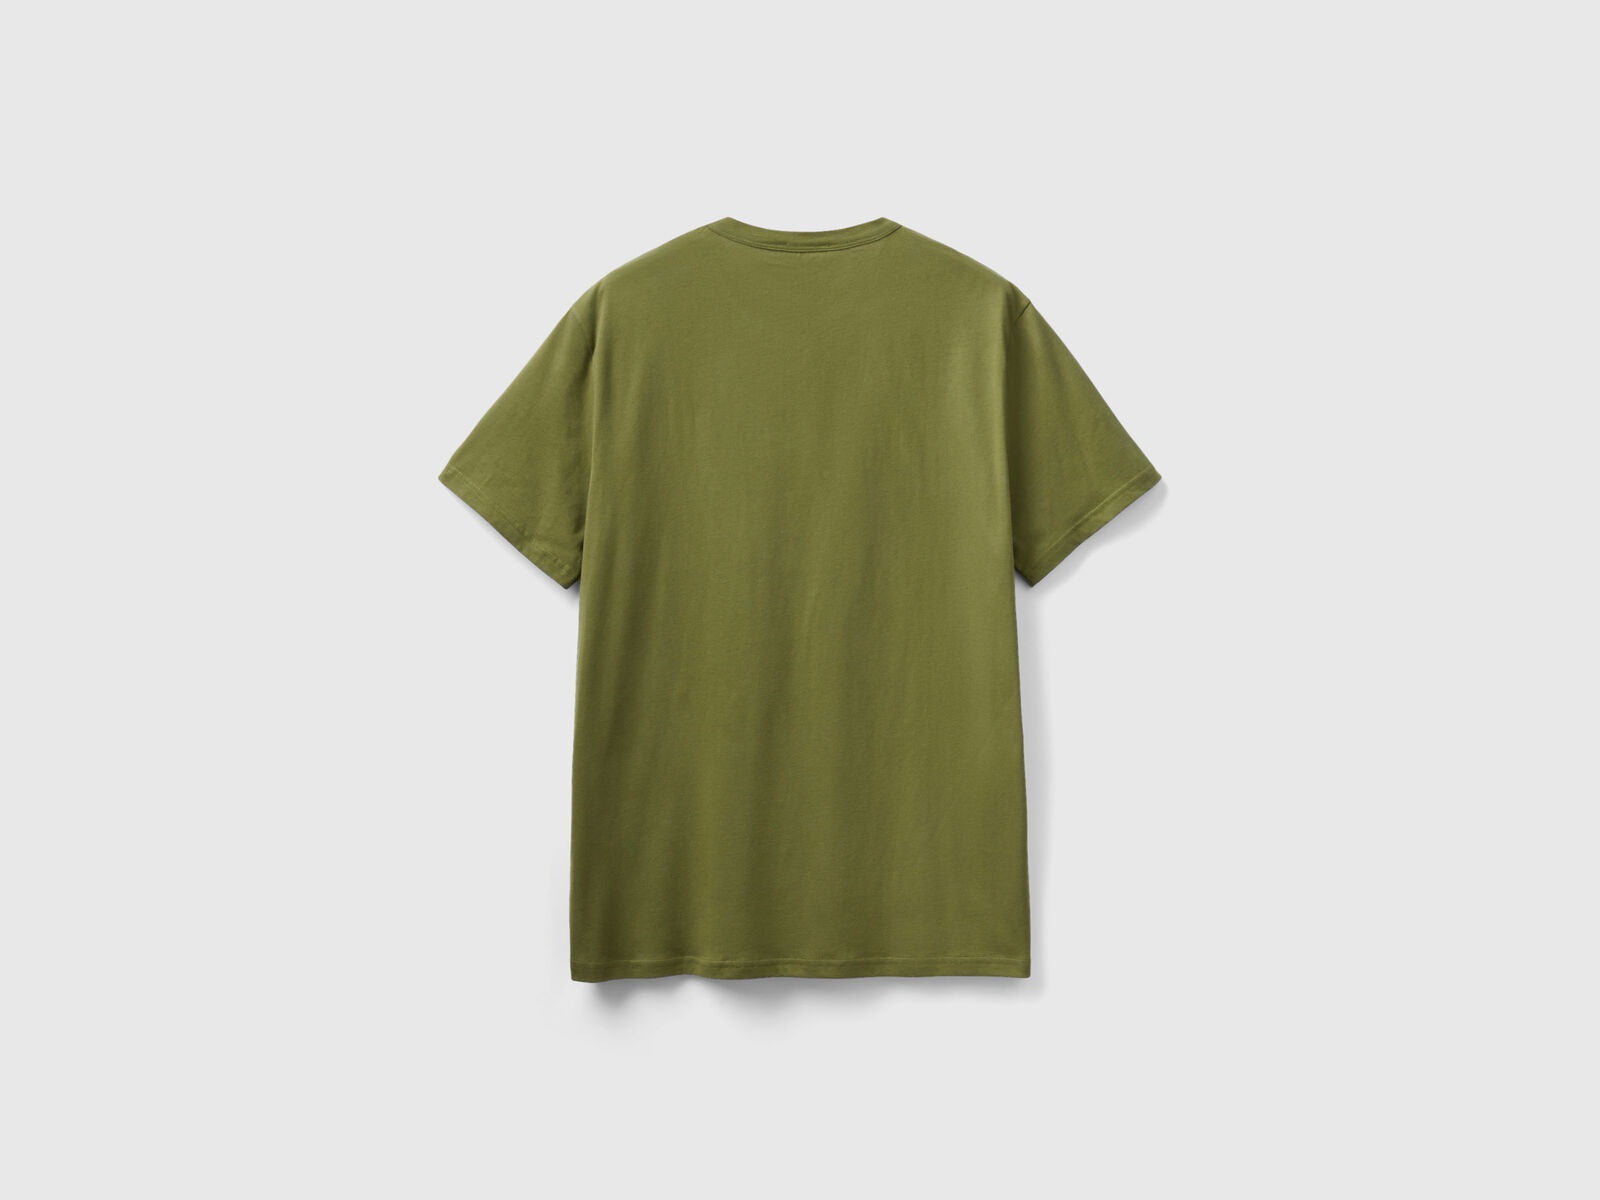 Benetton | in T-shirt - Military Green warm cotton